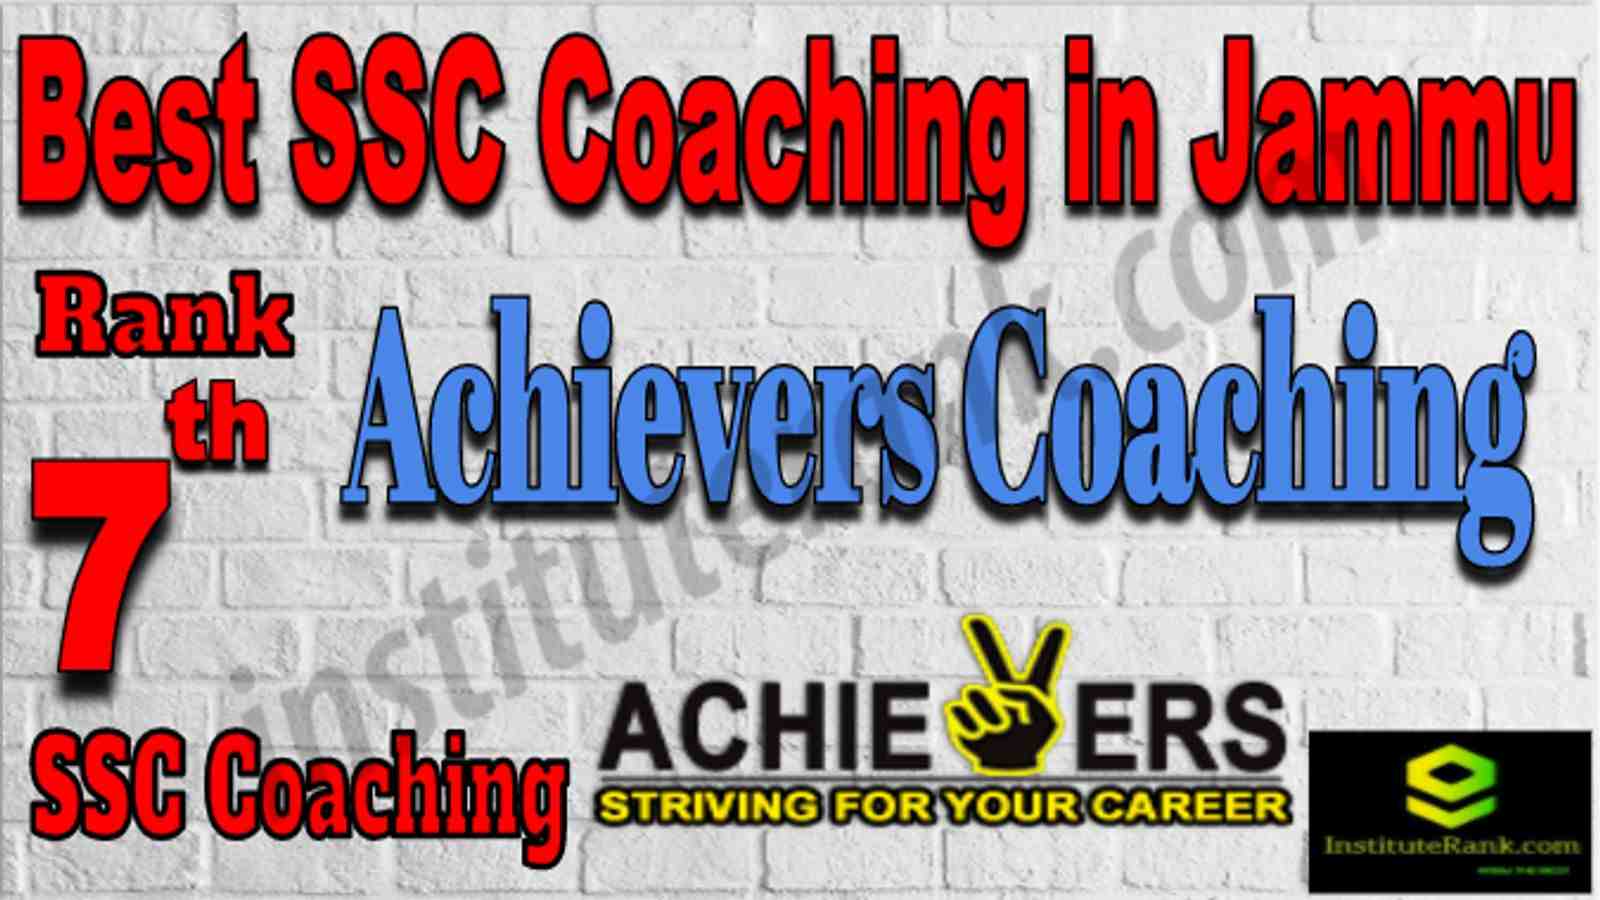 Rank 7 Best SSC Coaching in Jammu